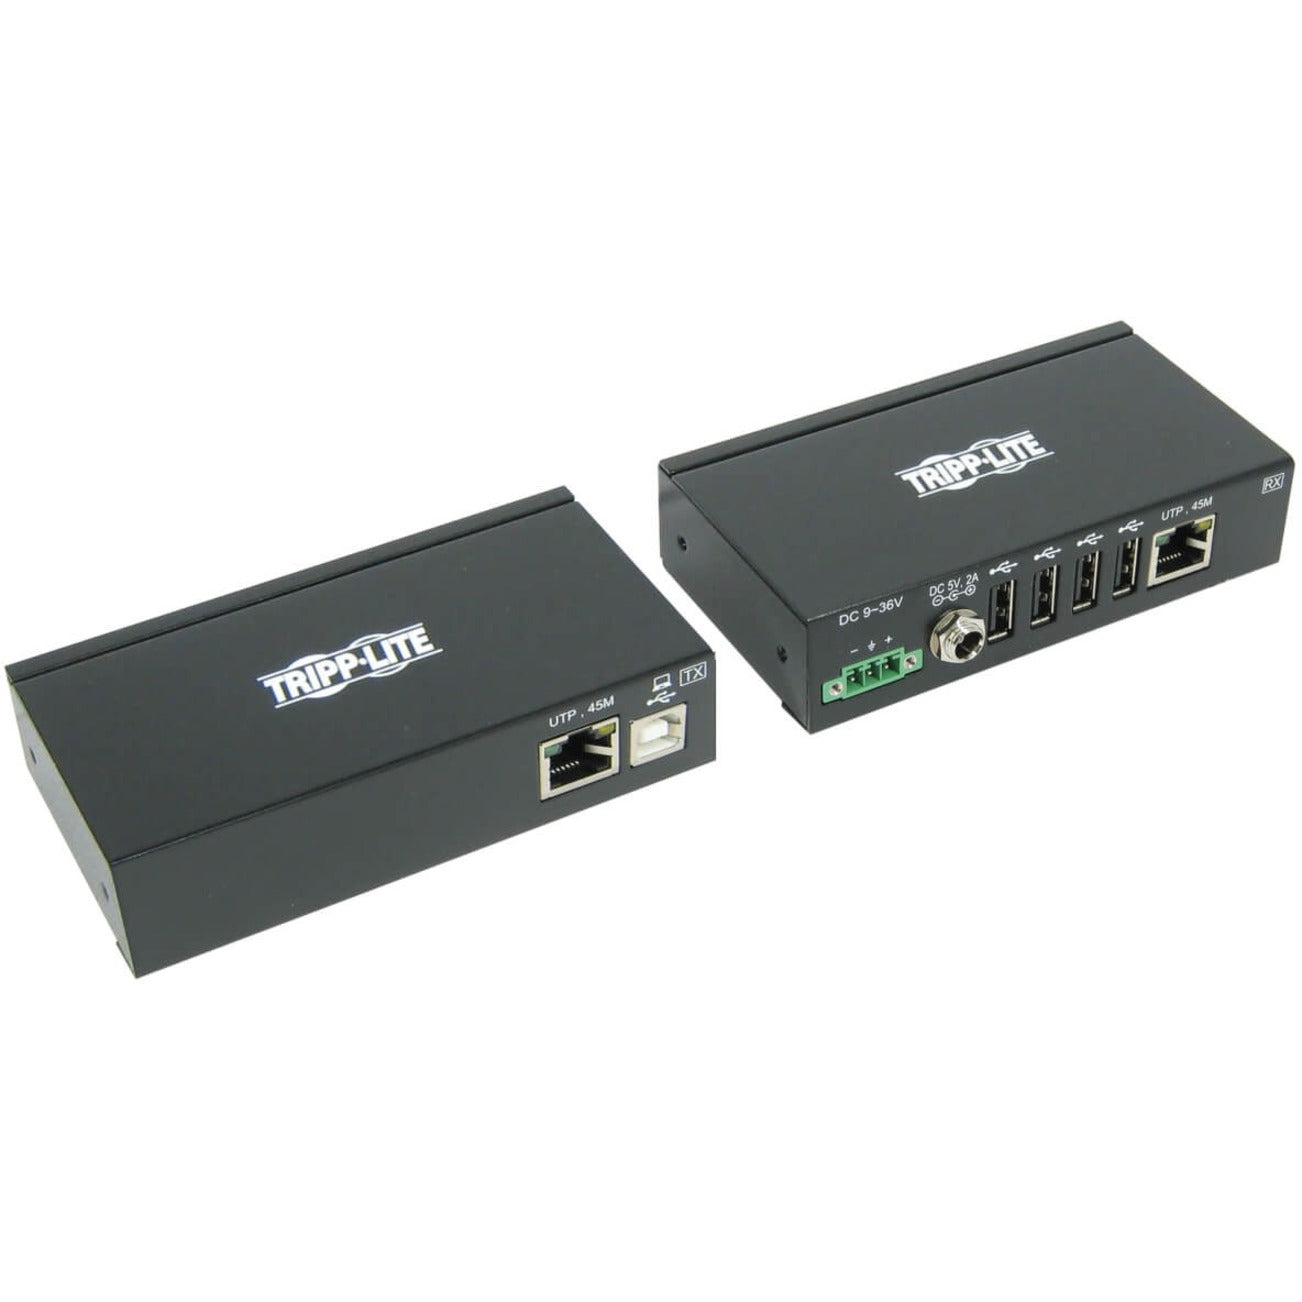 Tripp Lite B203-104-IND Video Extender Transmitter/Receiver USB Network RJ-45 150 ft Range